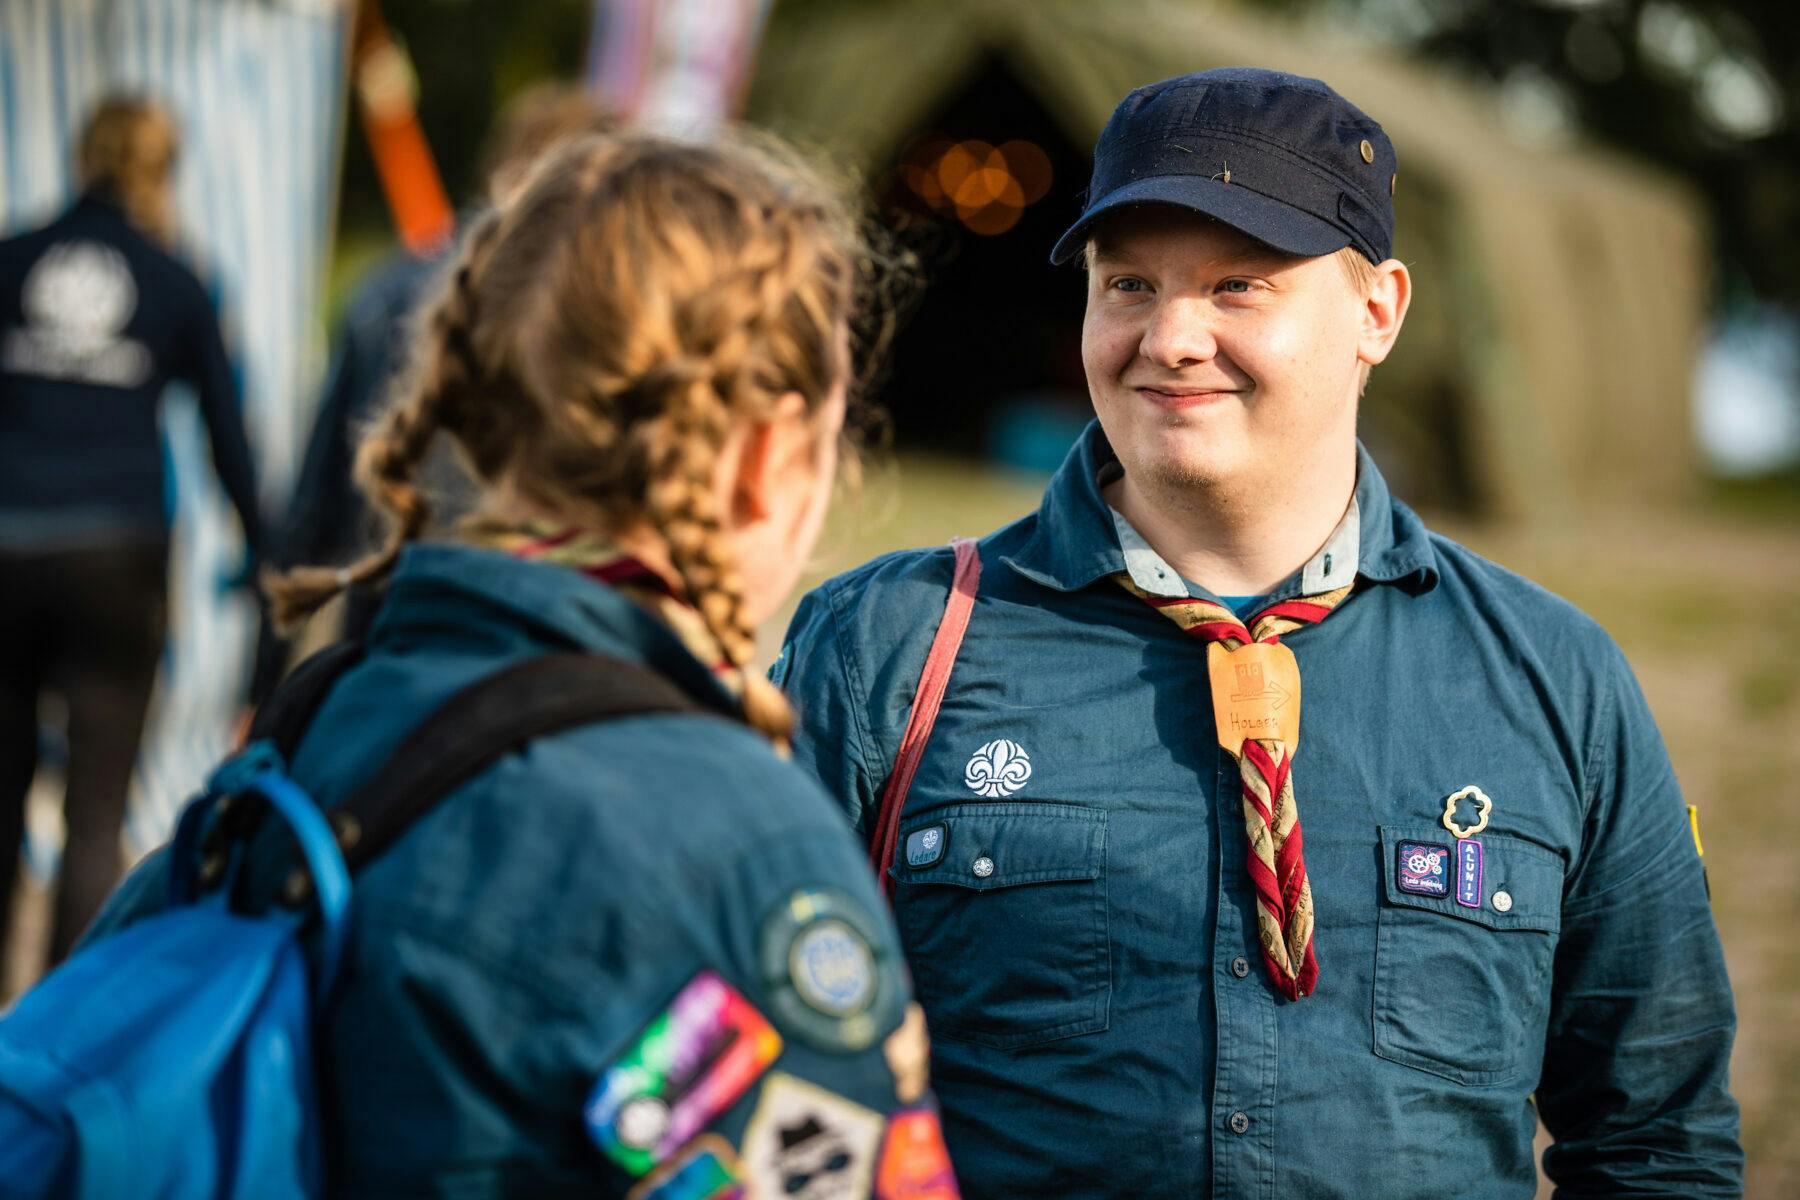 20190914 Scoutforum vid Gilwellstugan utanför Flen. Foto: Magnus Fröderberg Scoutforum 2019